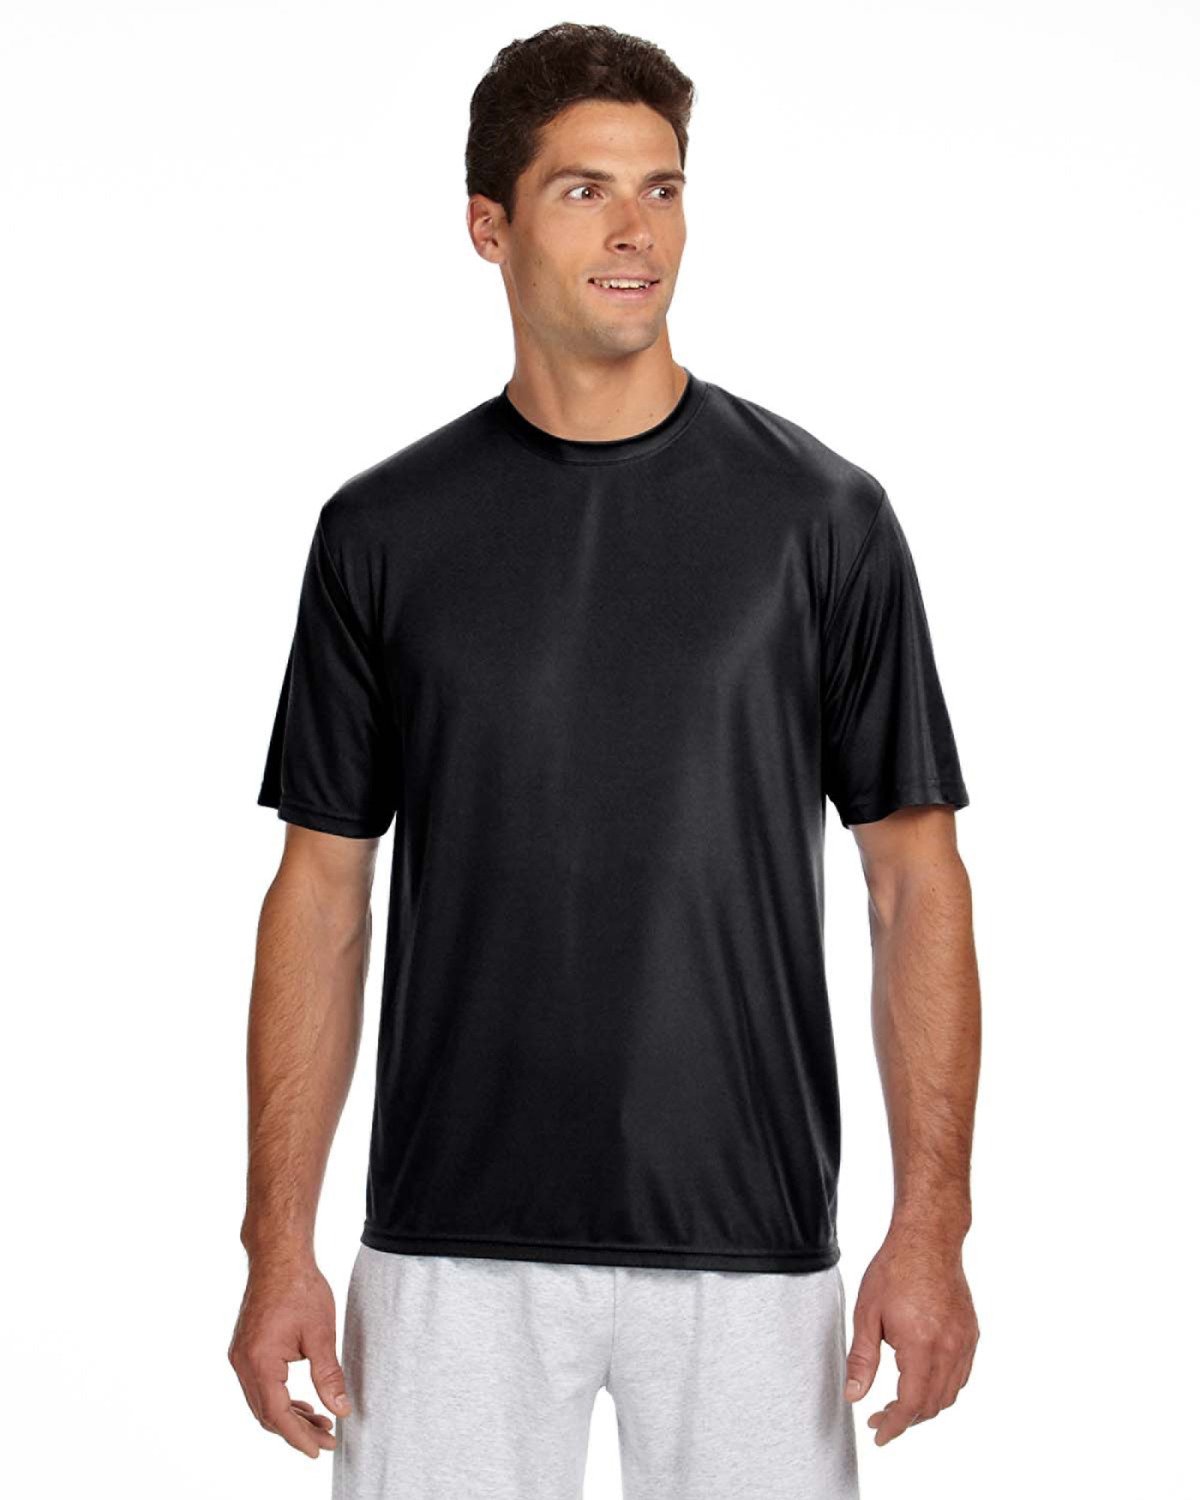 A4 Men's Cooling Performance T-Shirt N3142